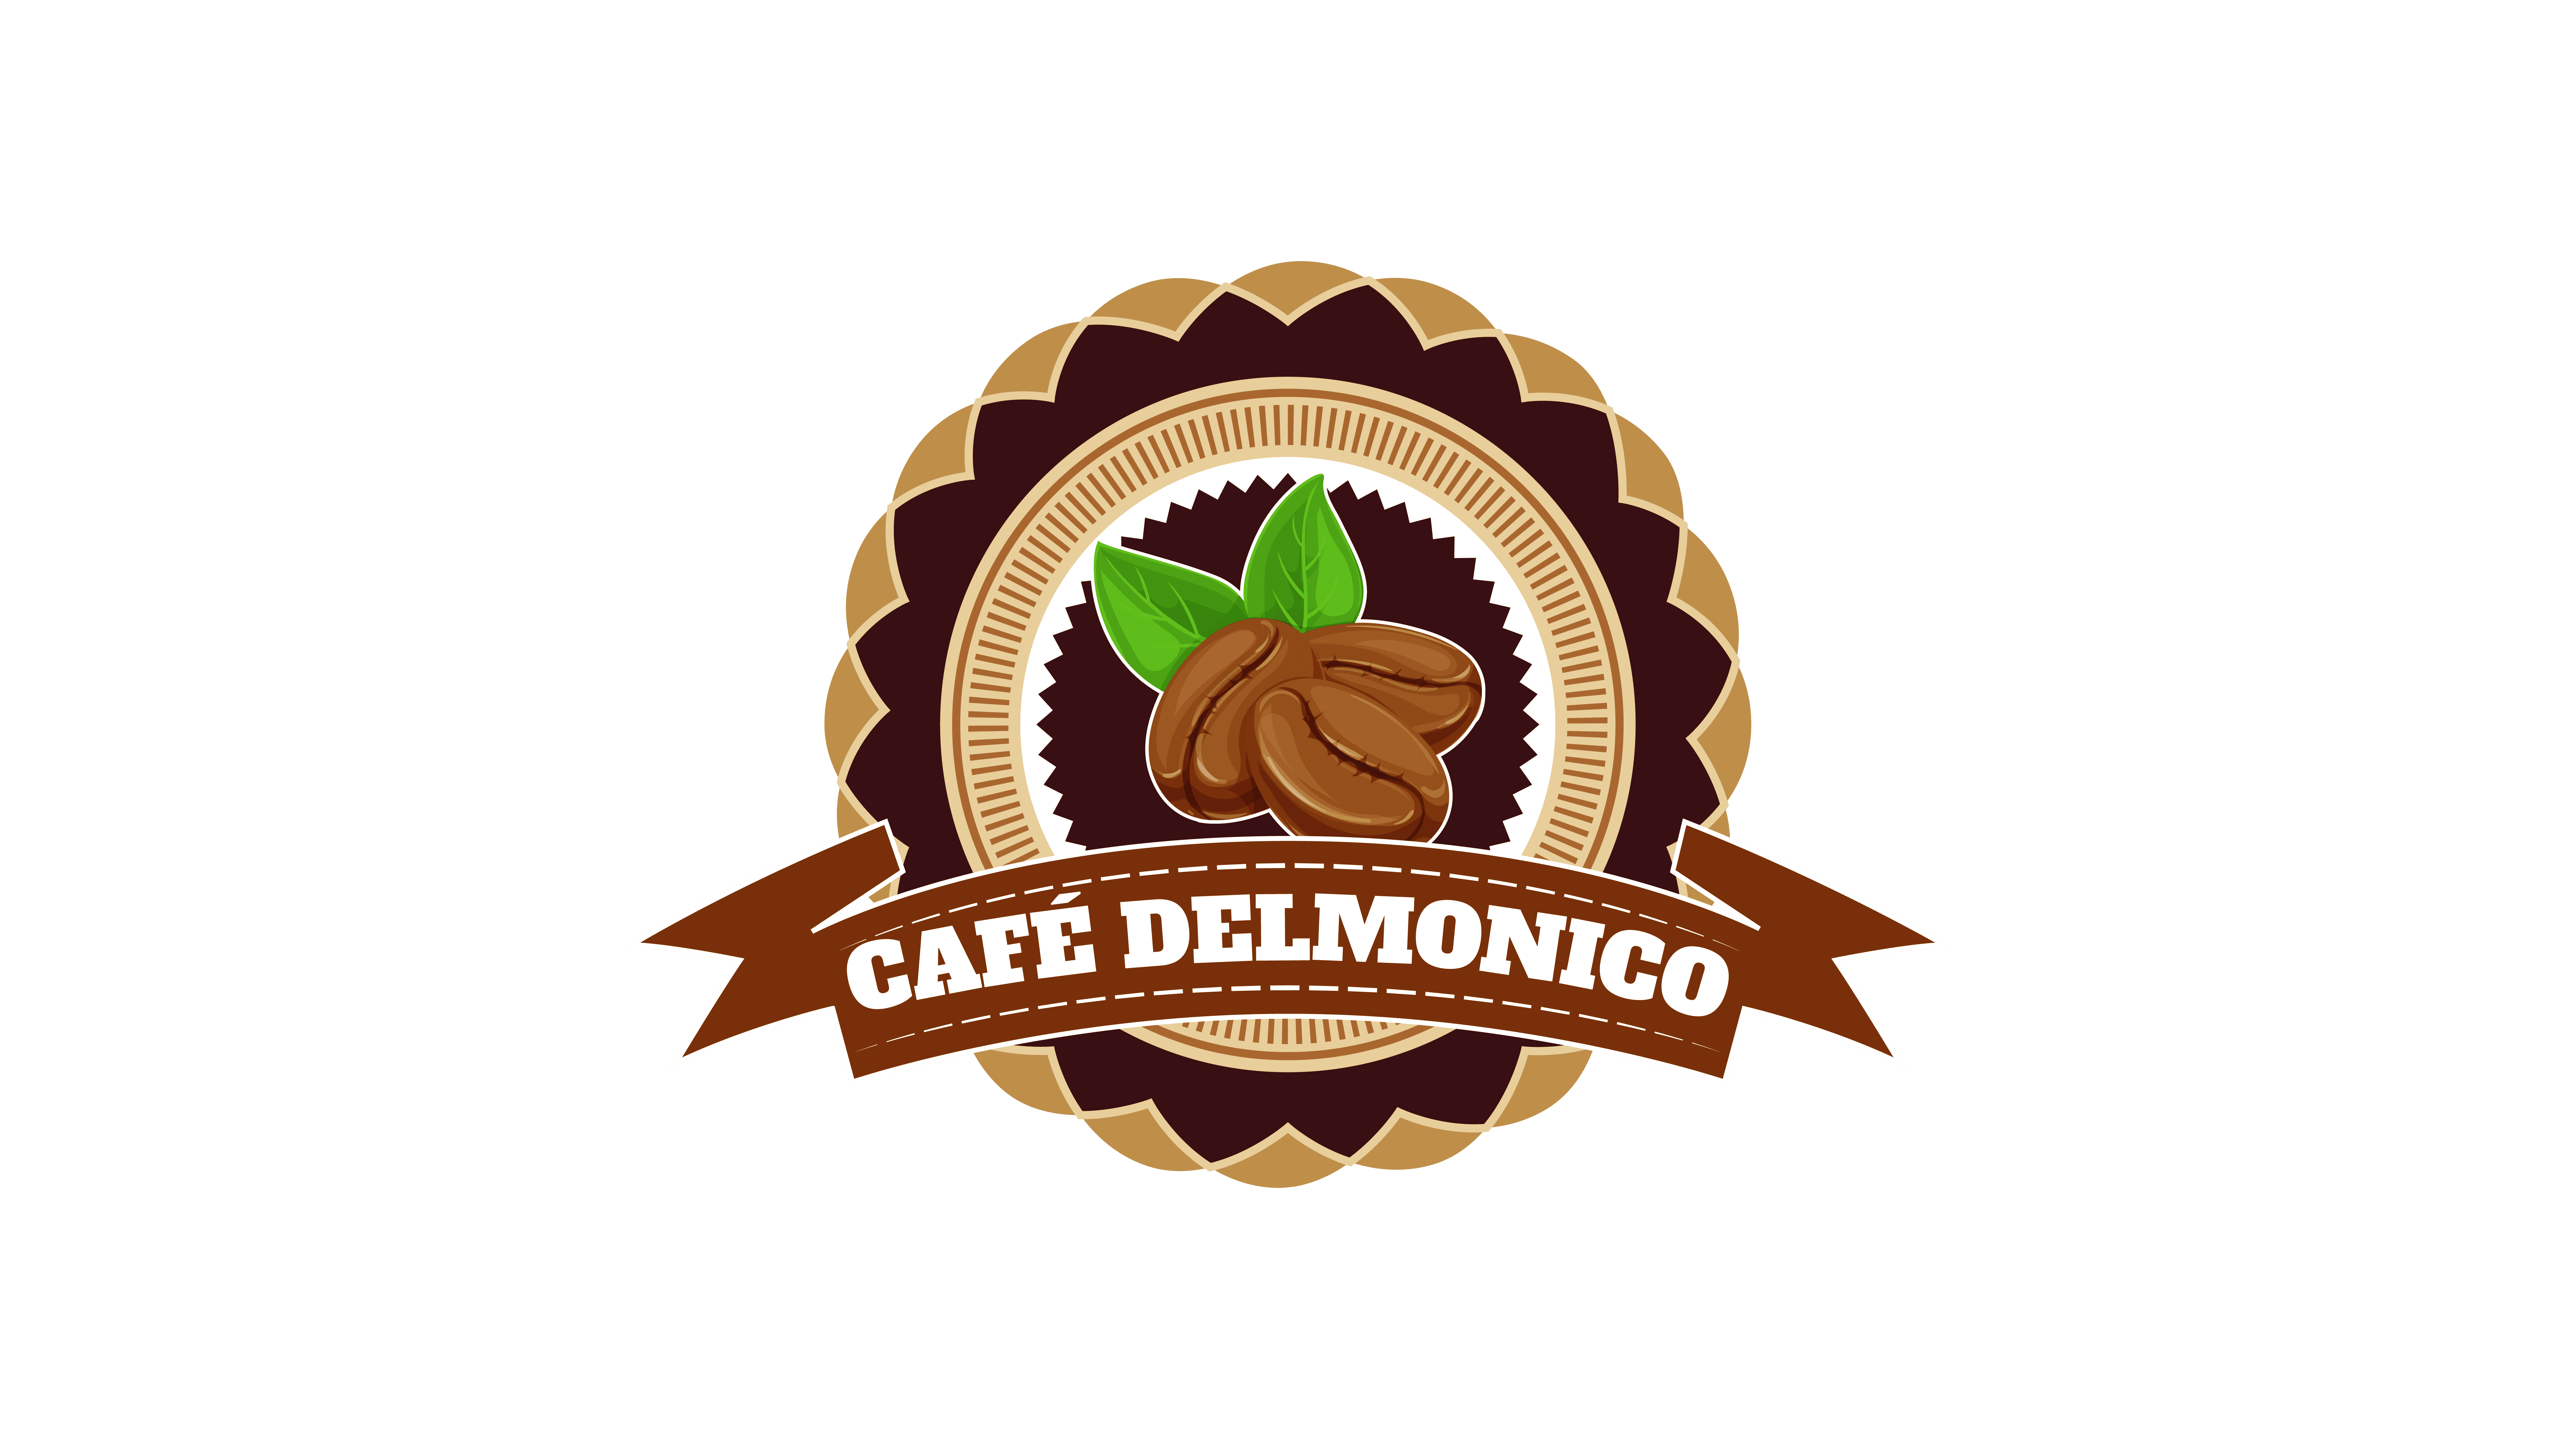 Cafe Delmonico 02